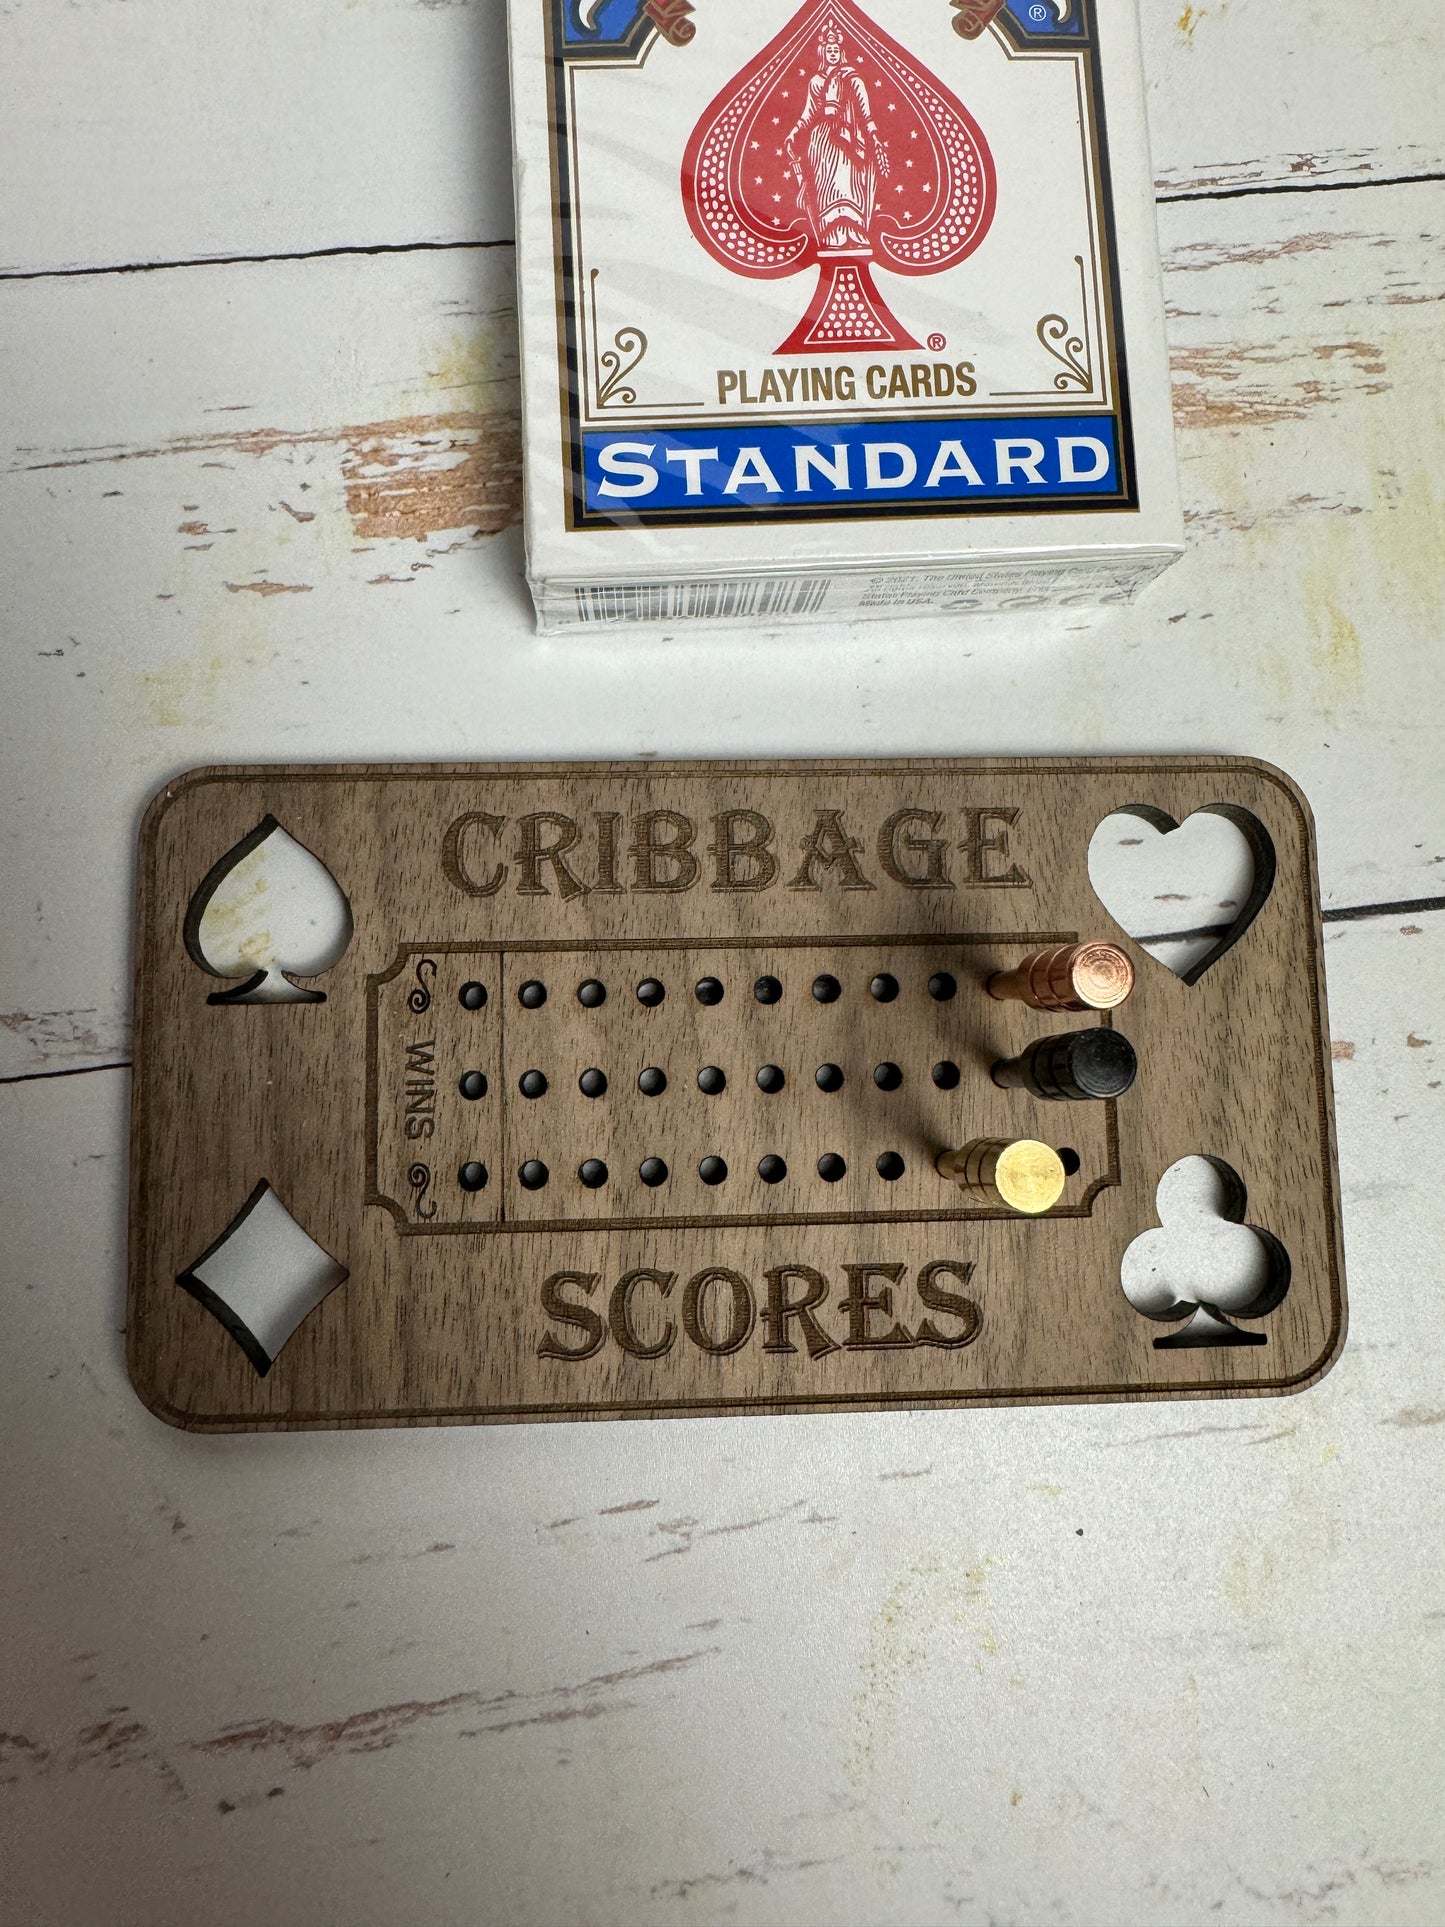 Cribbage score board